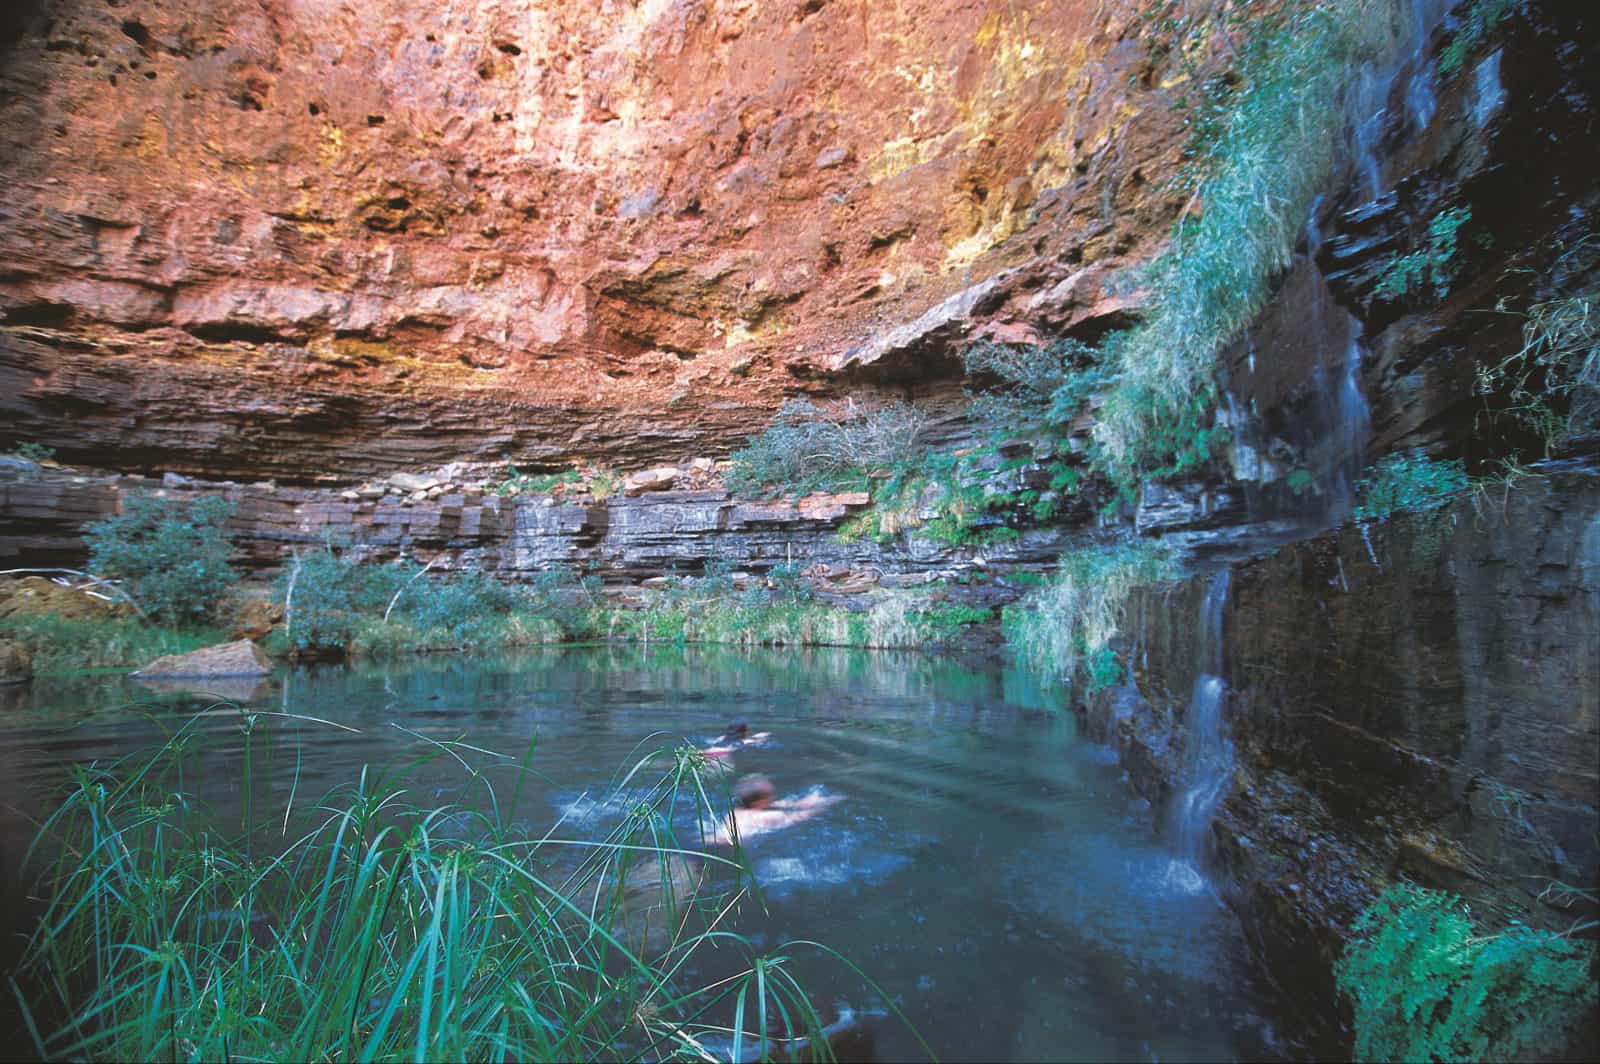 Dales Gorge and Circular Pool, Tom Price, Western Australia